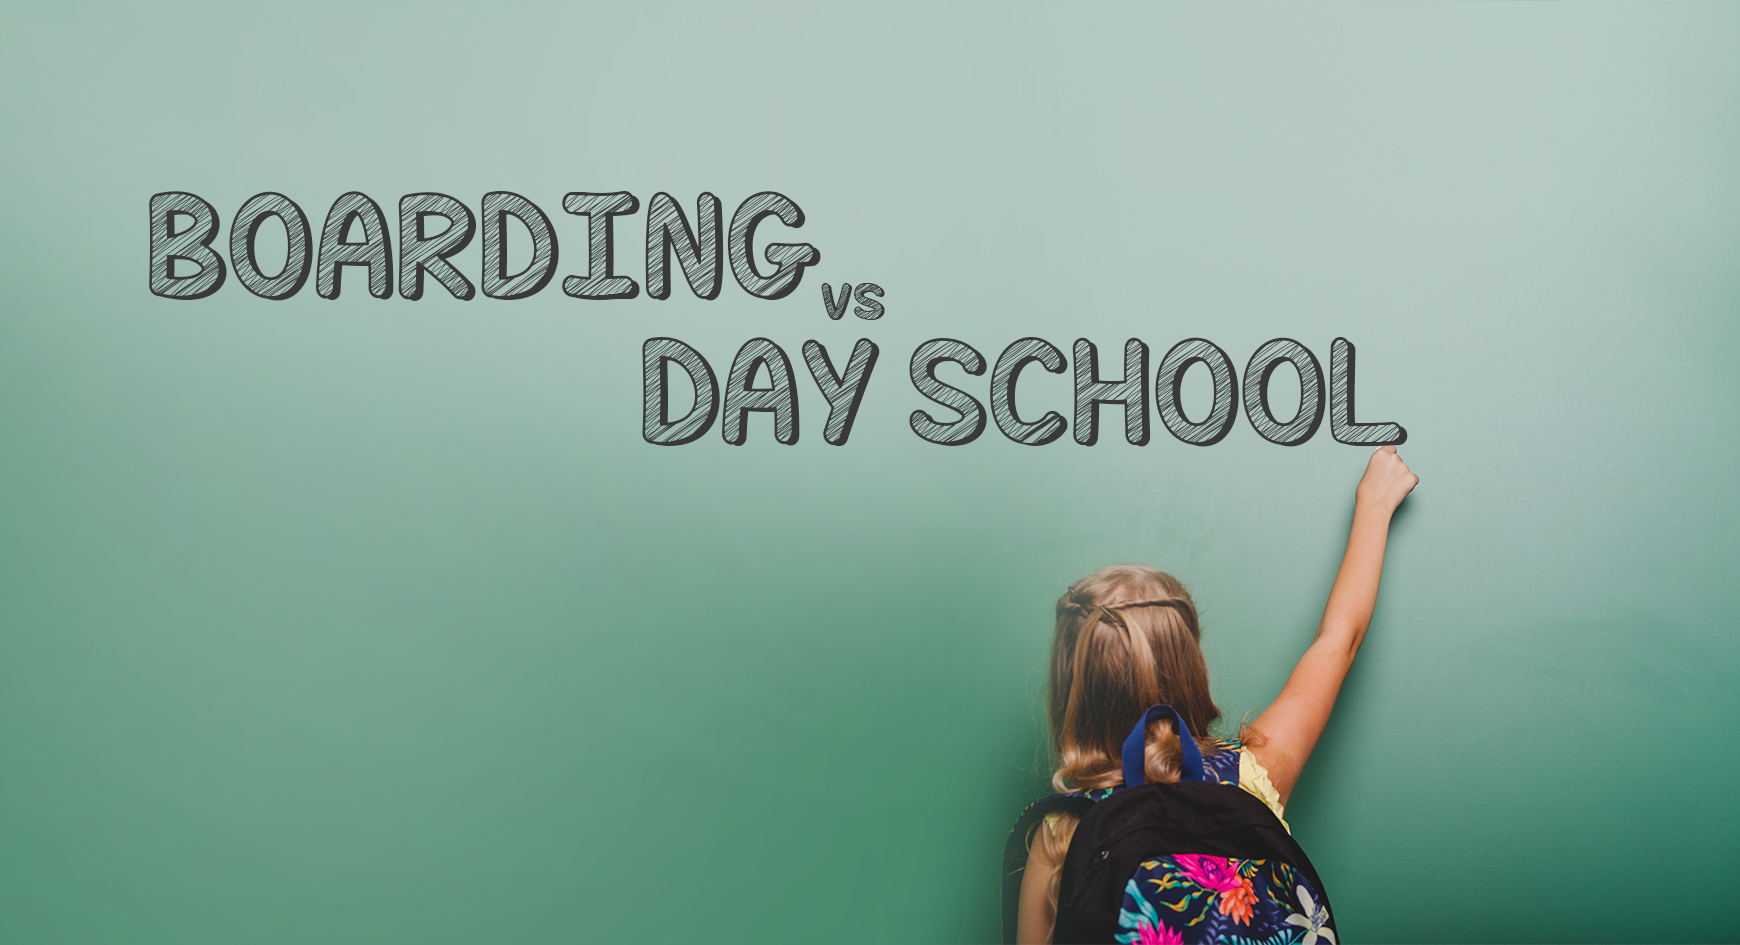 Which is better: Boarding School or Day School?